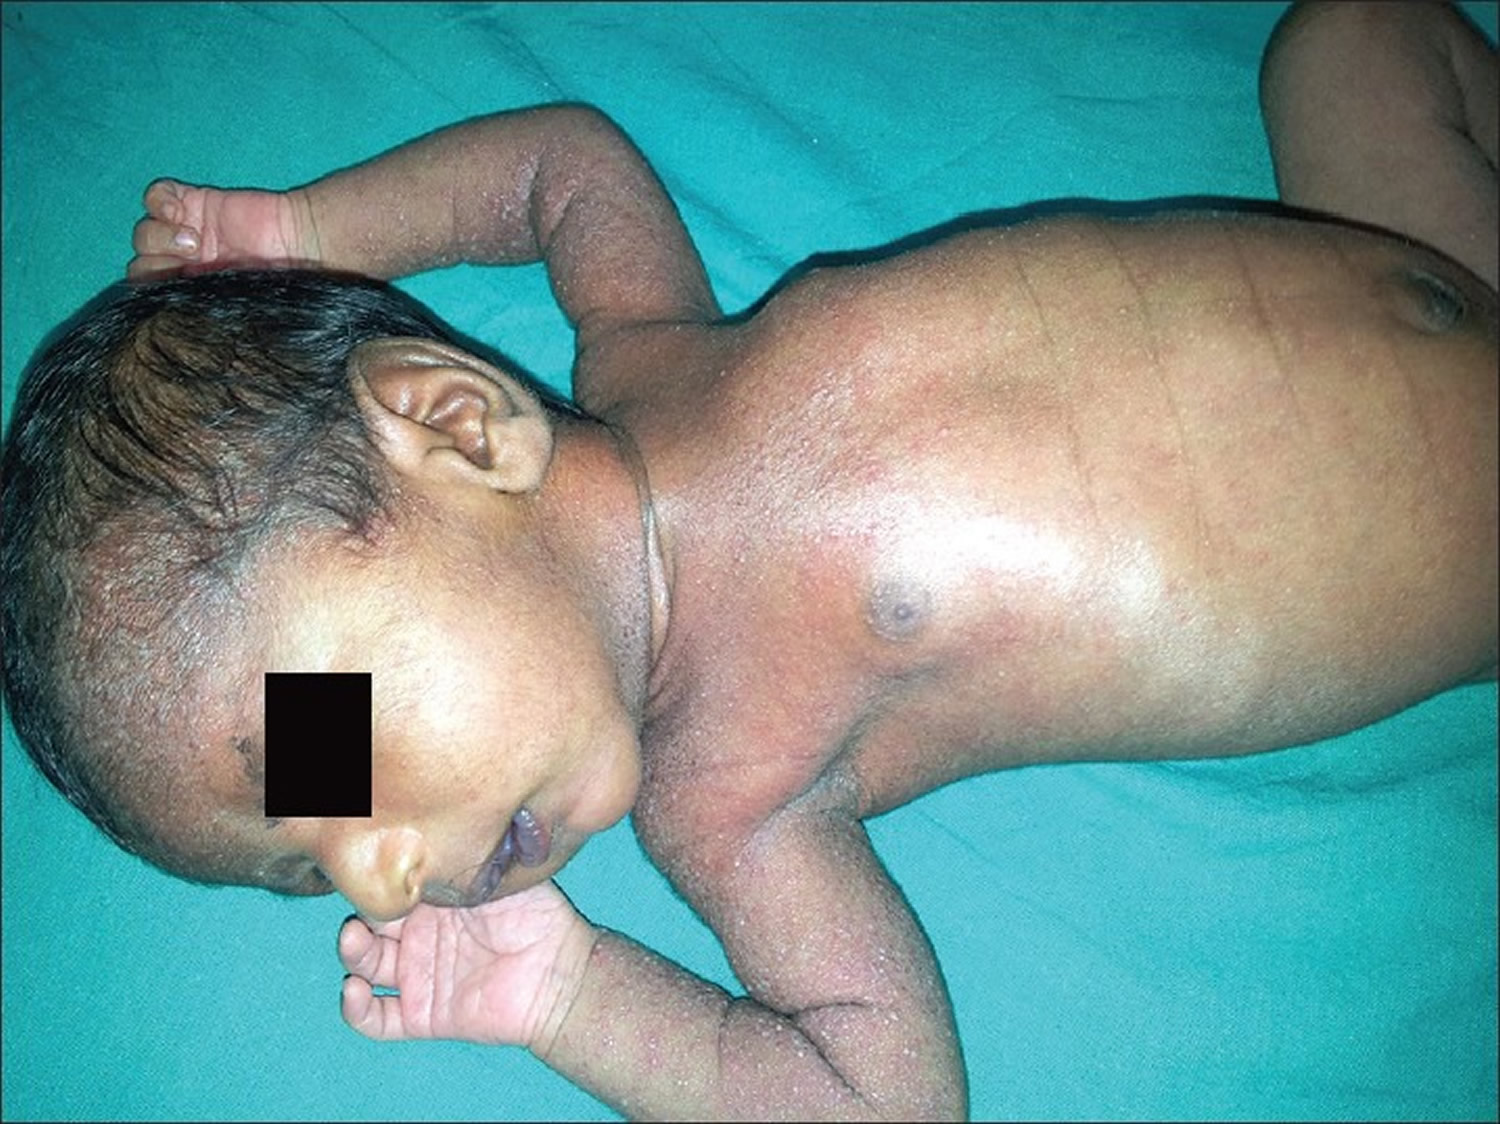 Transient neonatal pustular melanosis